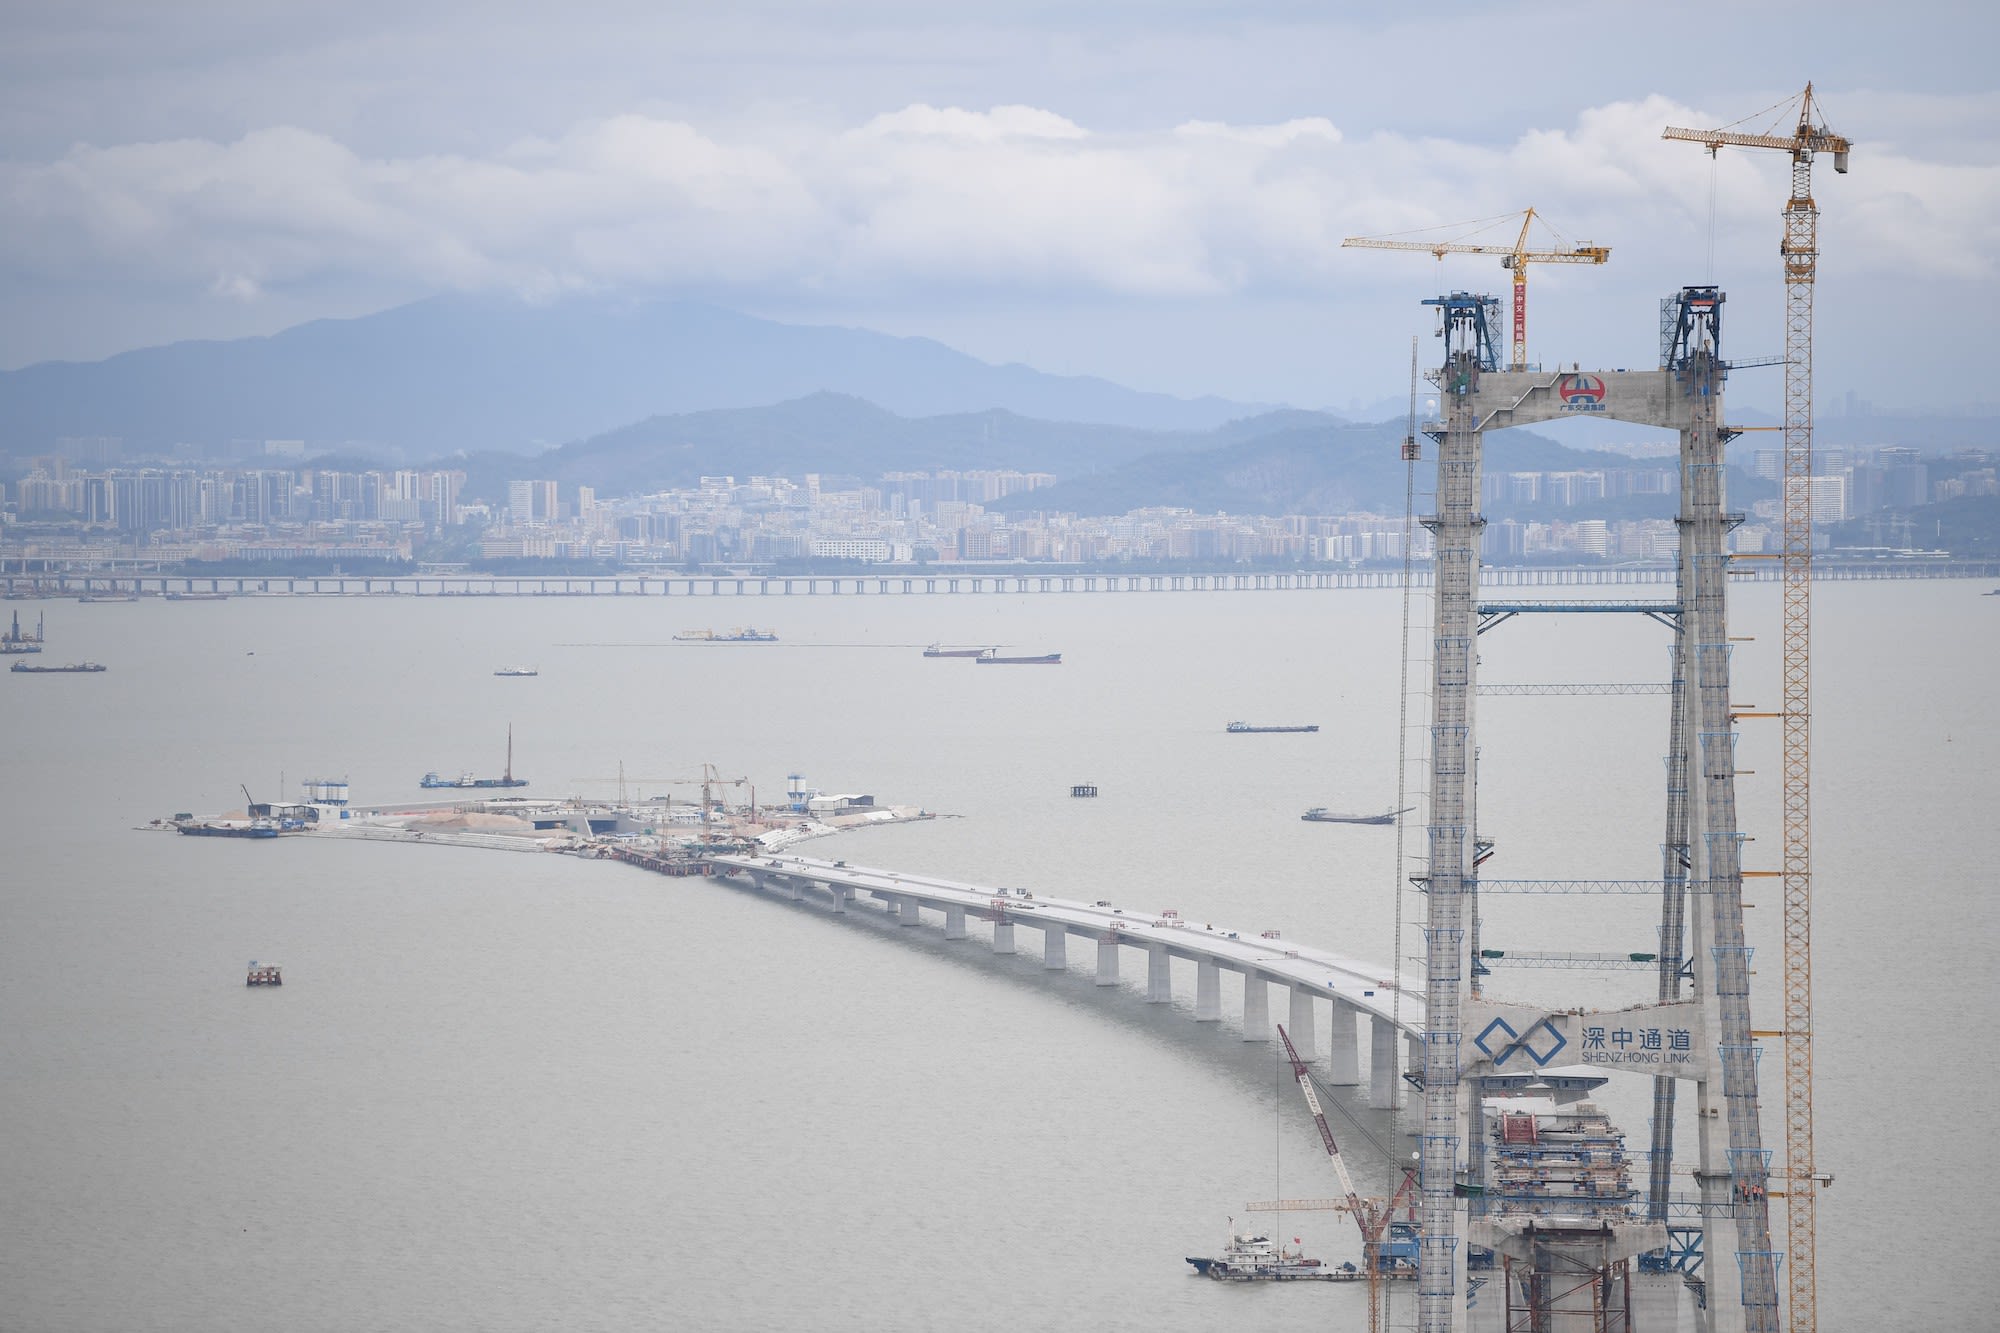 Möbius ring-inspired bridge to be built in China